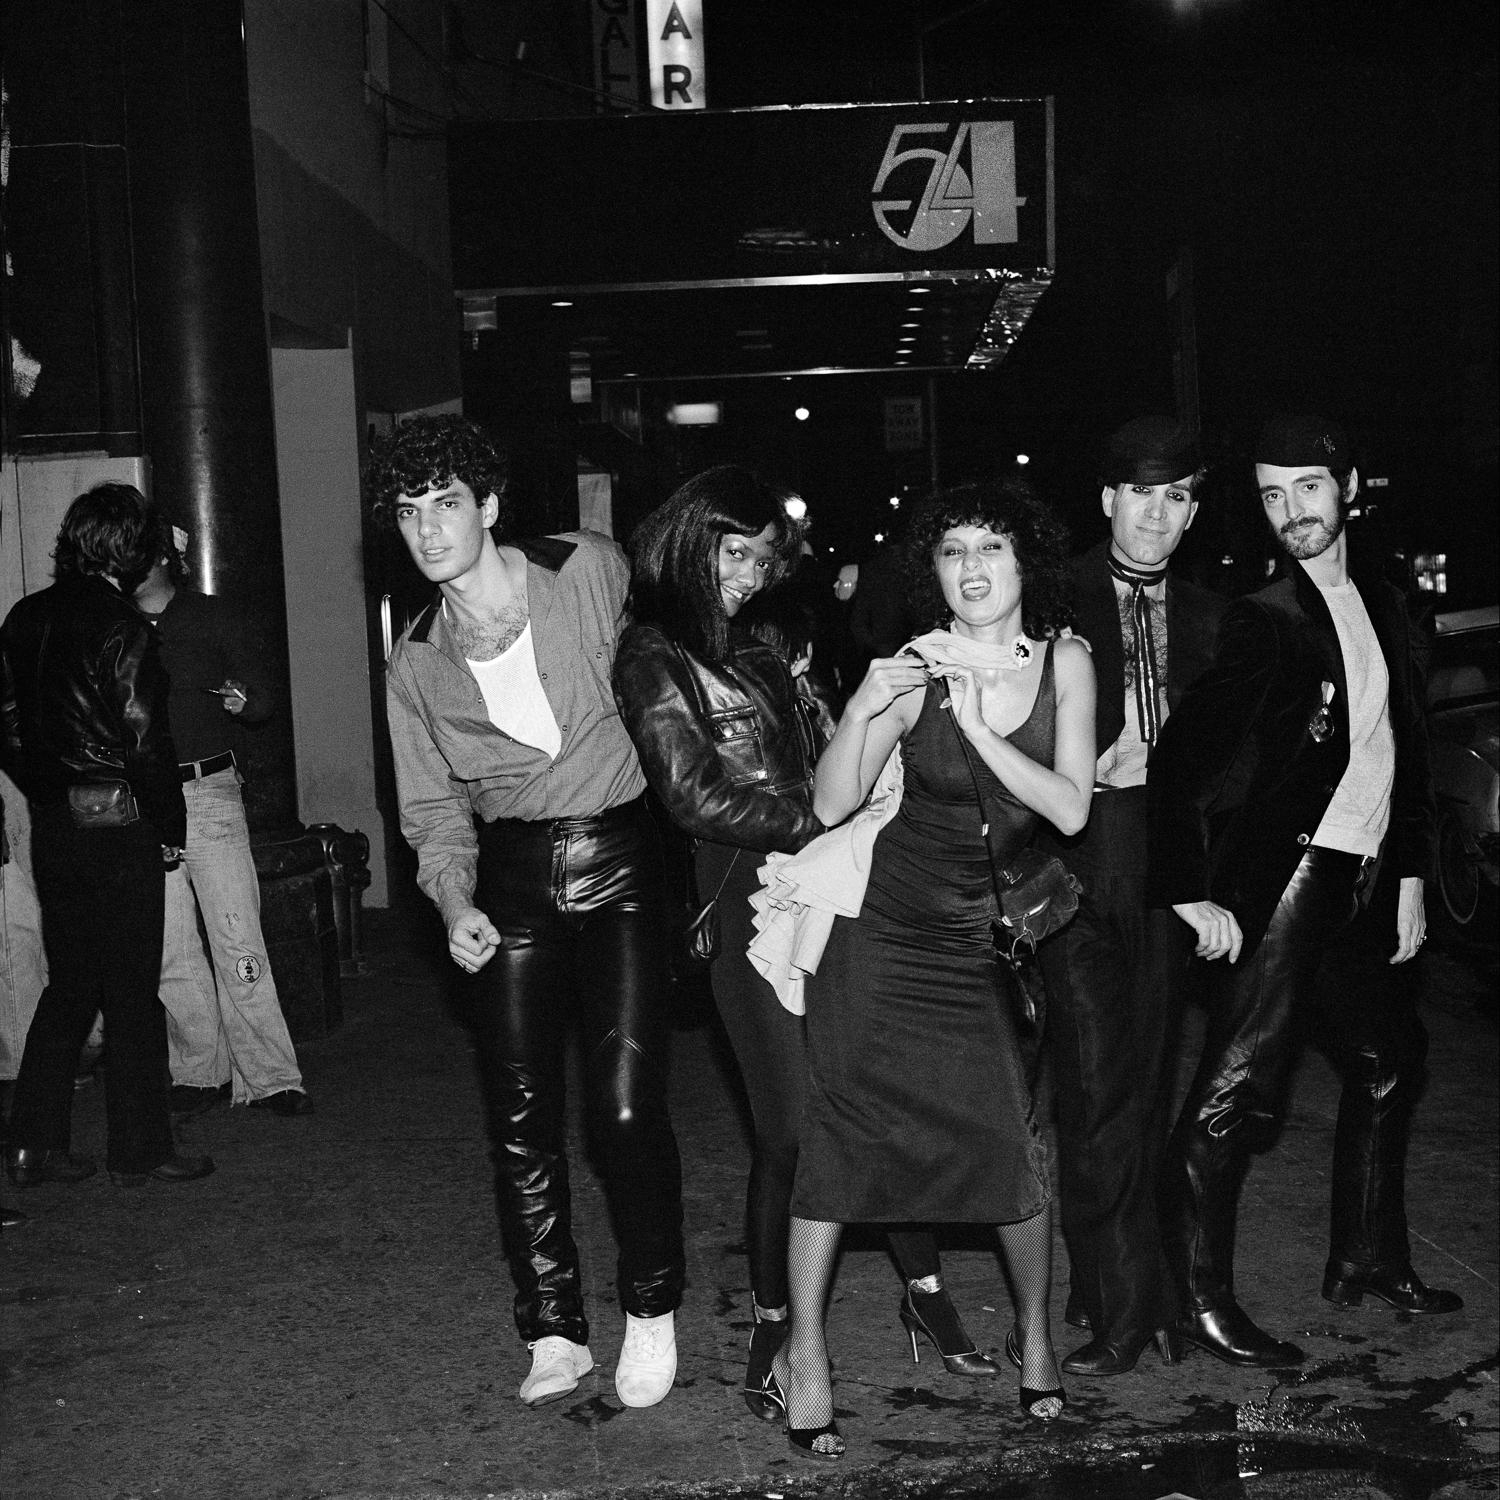 Five Fashionable Rejects (With JudiJupiter) Studio 54, NY, NY October 1978 - Photograph by Meryl Meisler